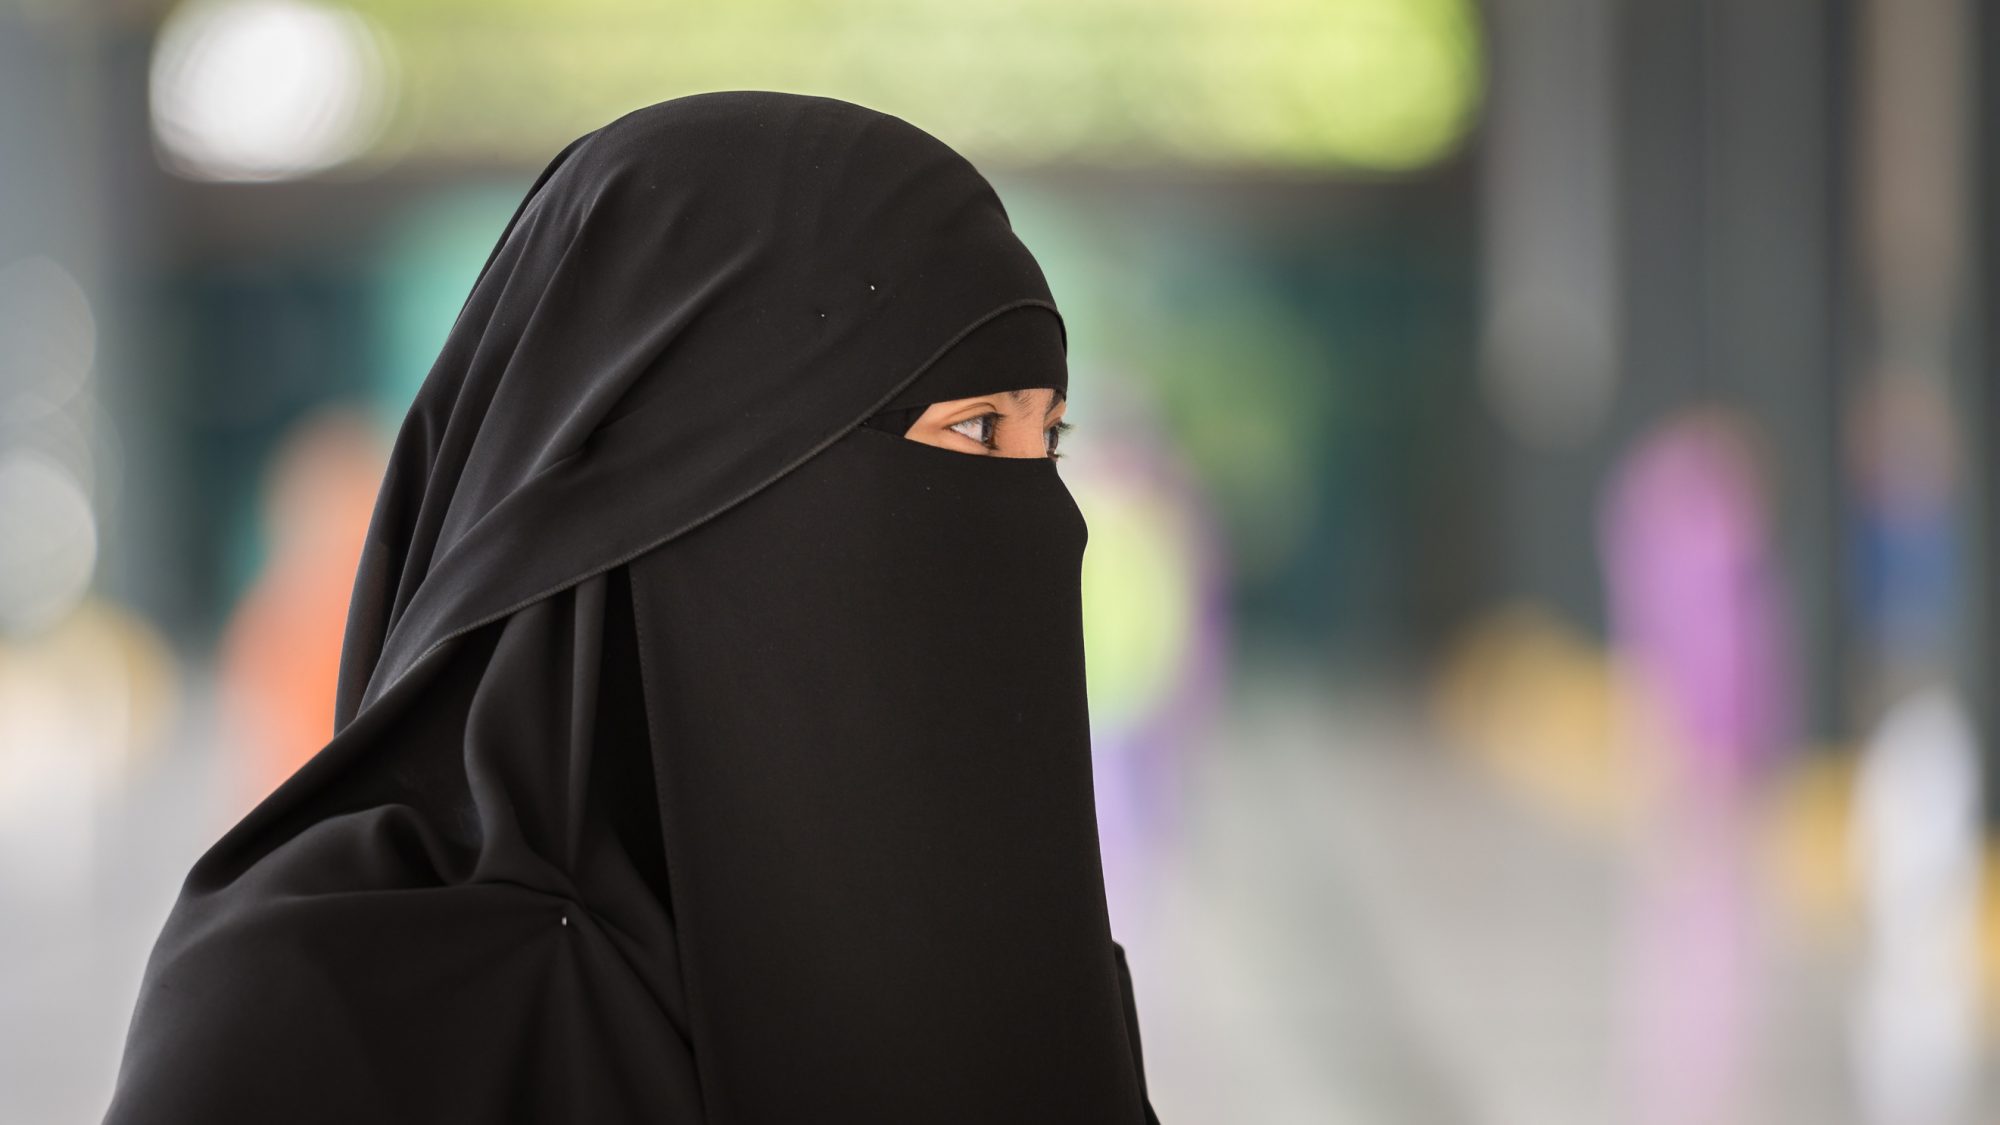 Dress Code Women In Islam Concept Of The Veil In Islam Qur Daftsex Hd